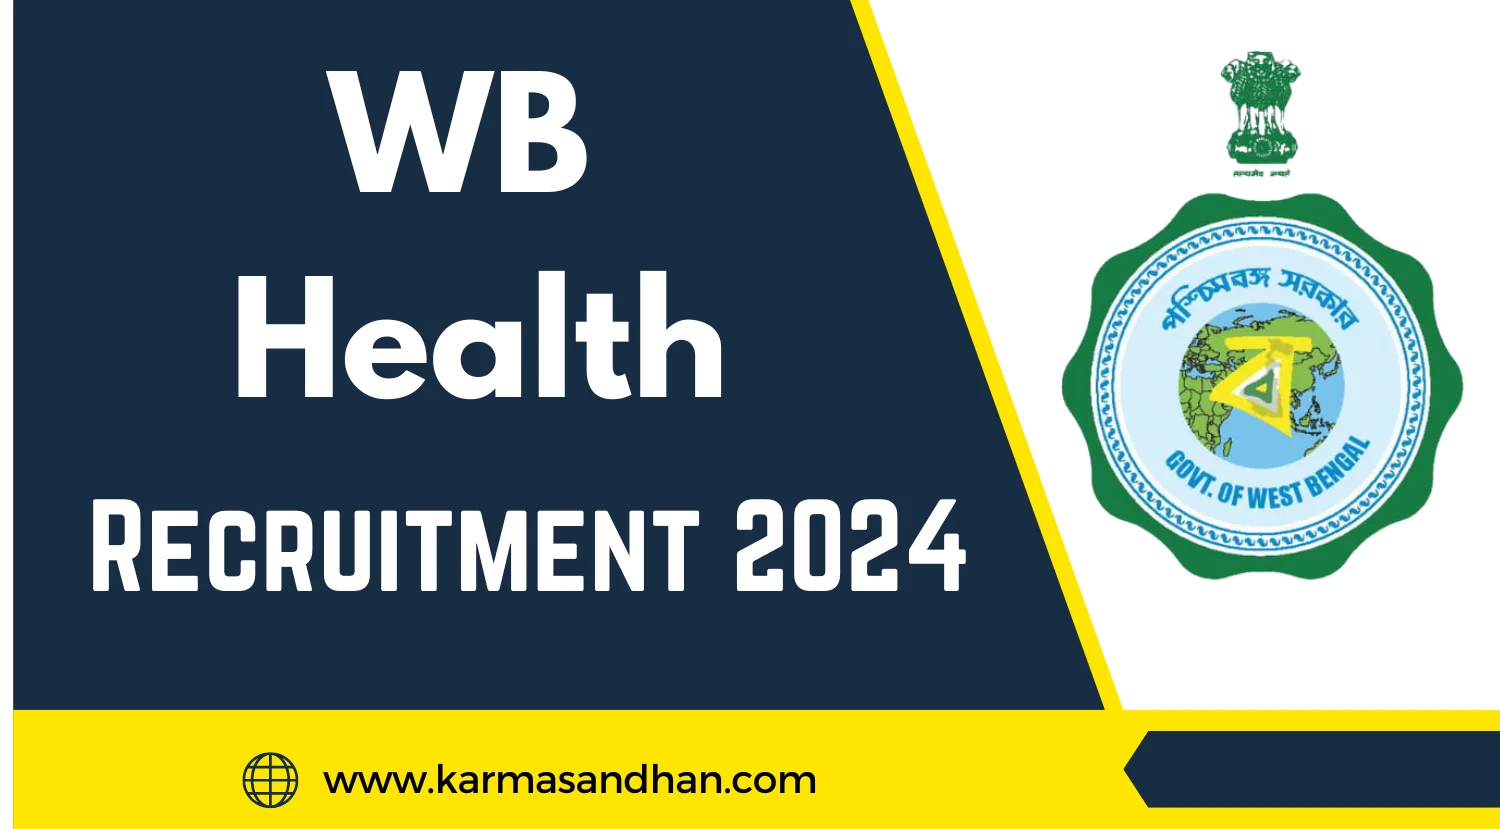 WB Health Surveyor Recruitment 2024